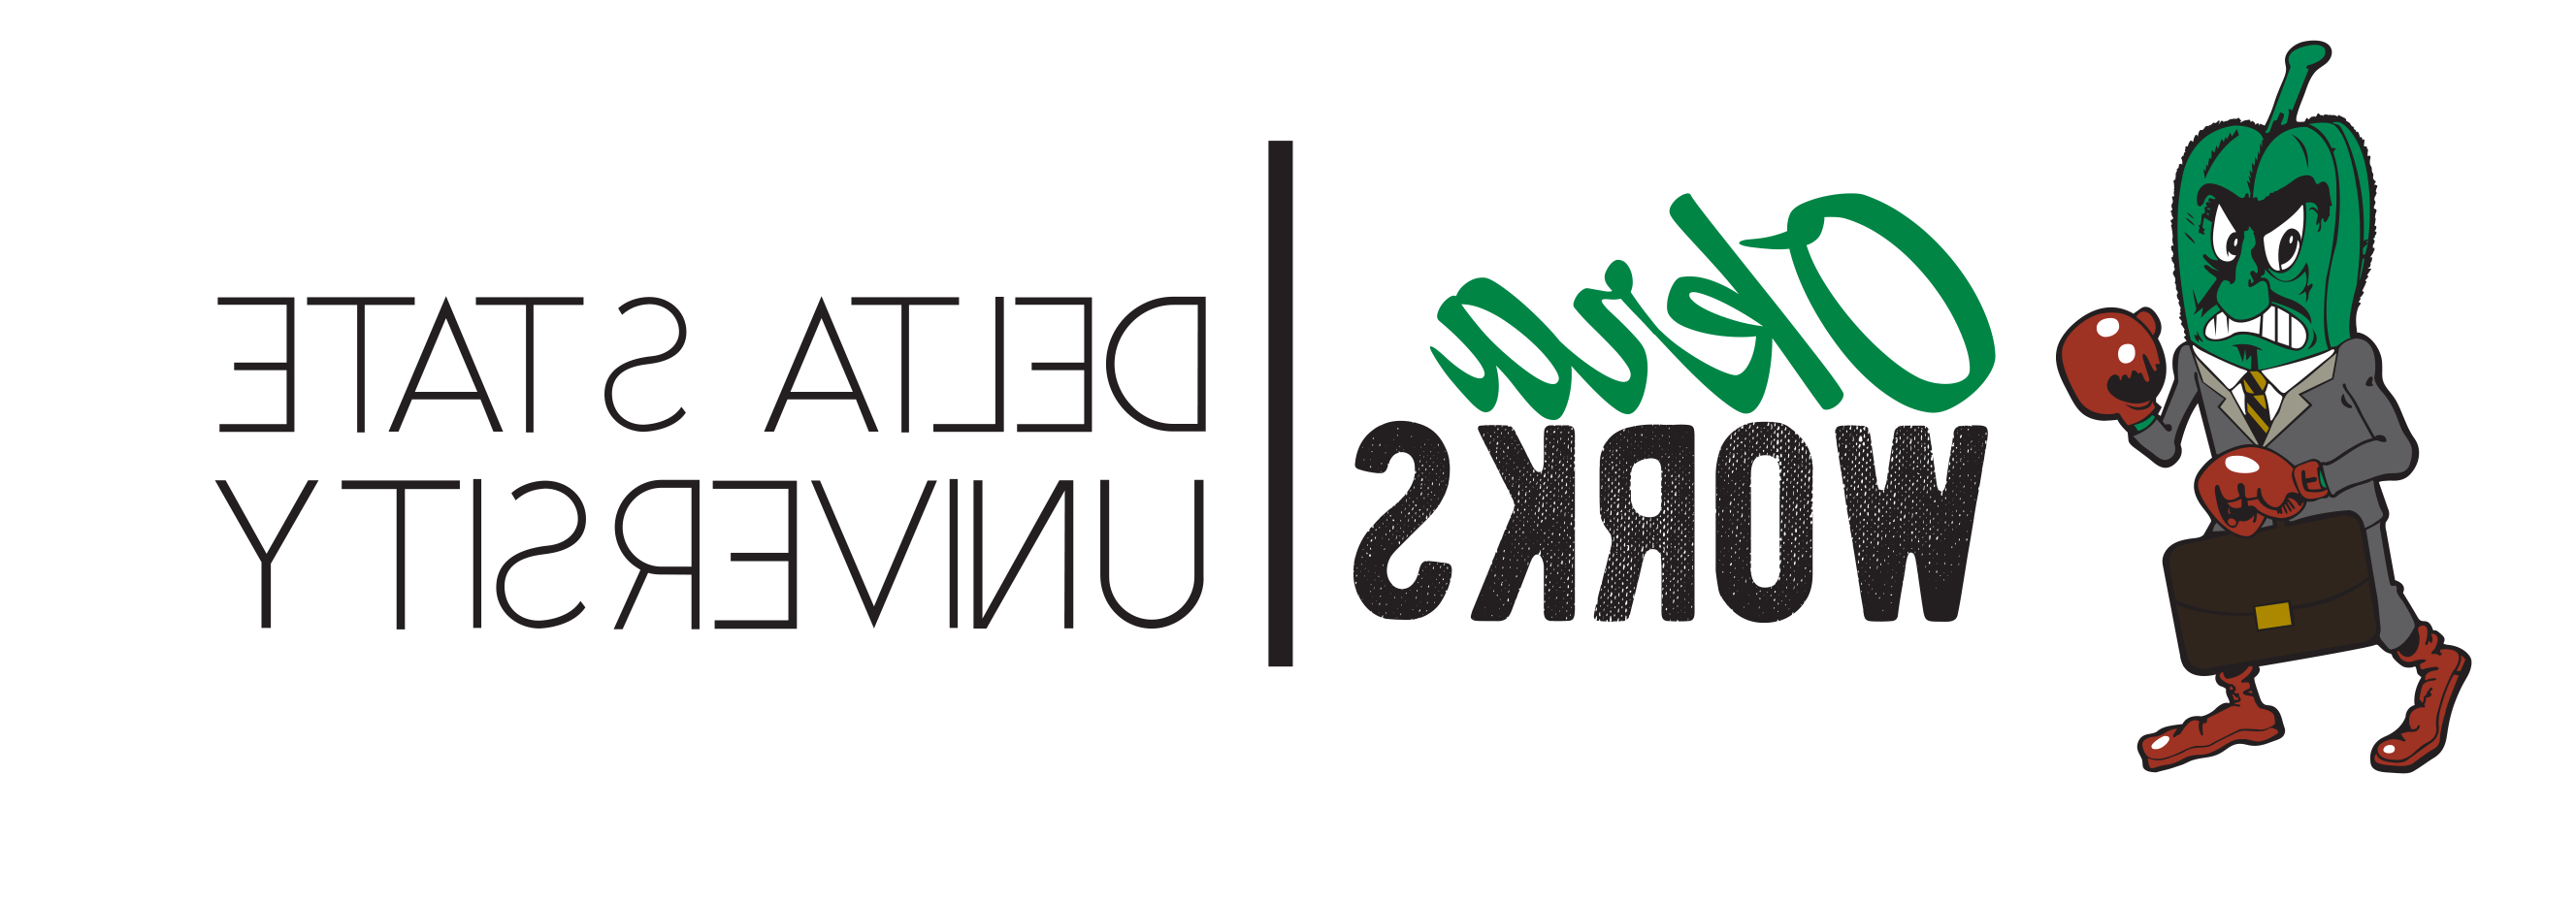 Delta State University Career Services - OkraWorks logo